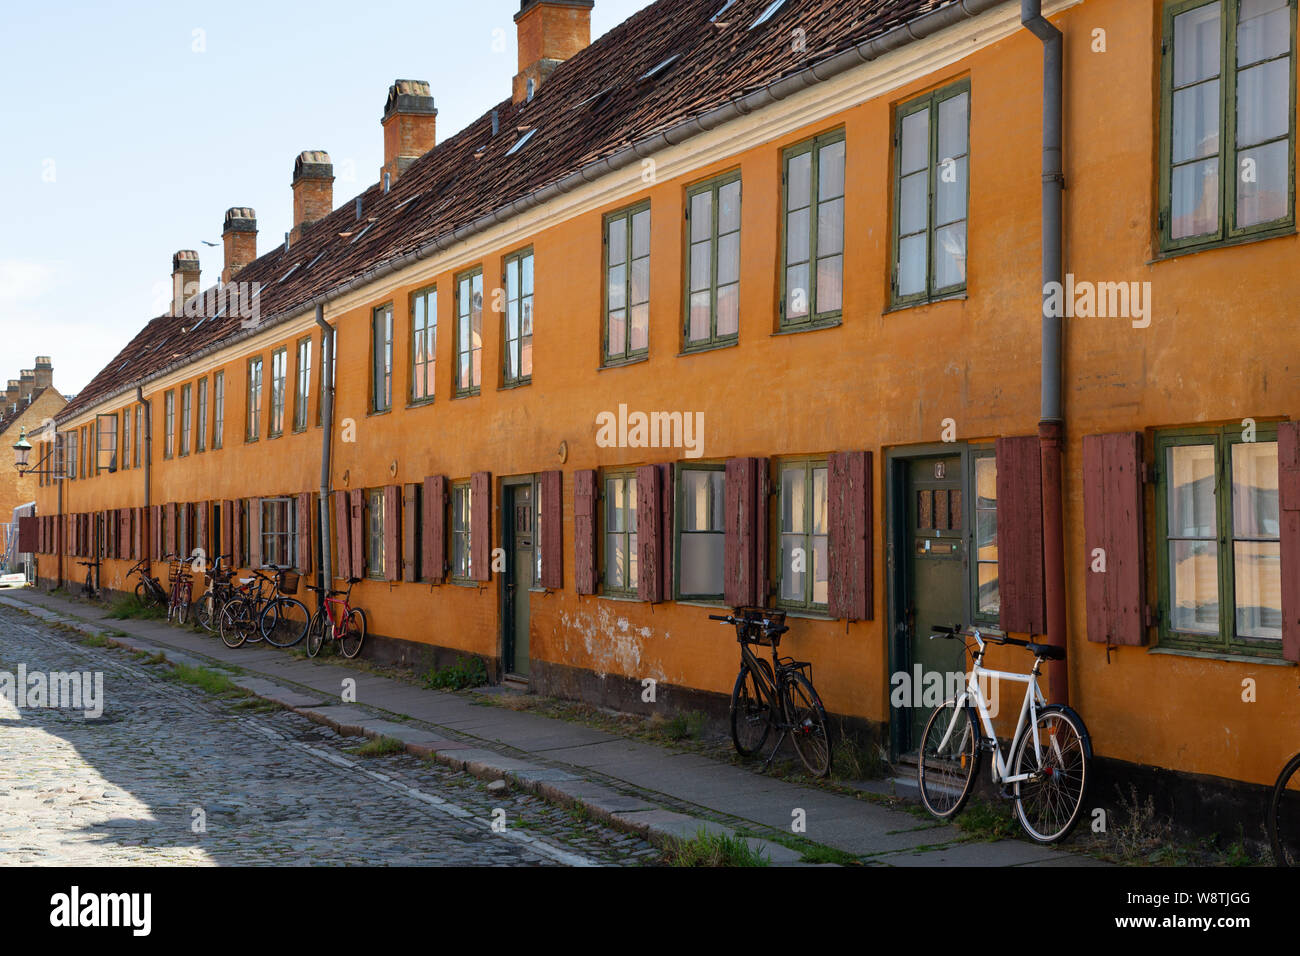 Kastellet Copenhagen Denmark - Old buildings in the Kastellet area, Copenhagen Denmark Scandinavia Stock Photo